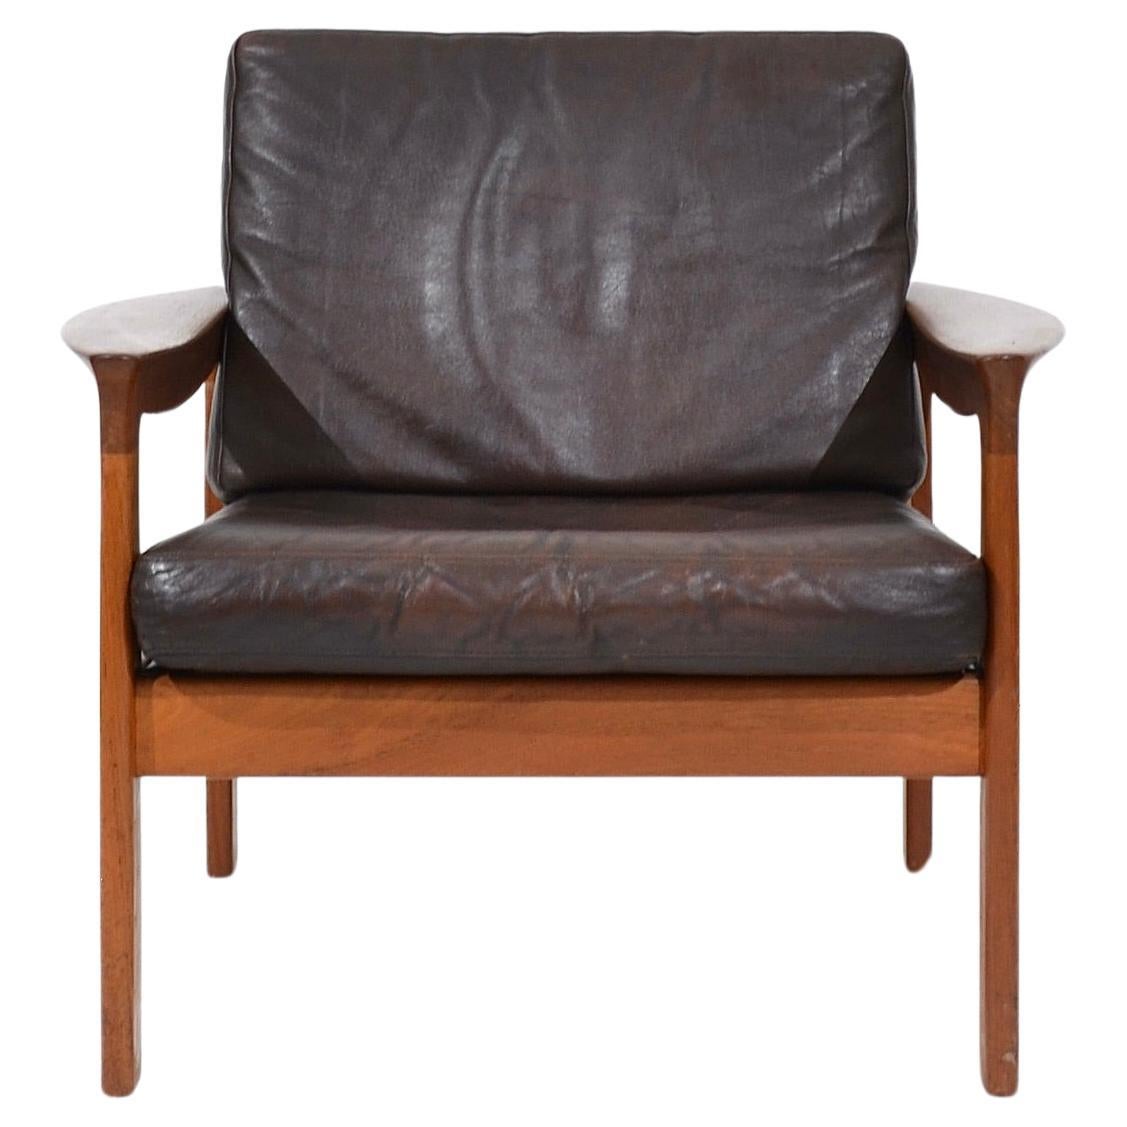 Leather and teak armchair, Arne Wahl Iversen, Komfort, Denmark, 1960's For Sale